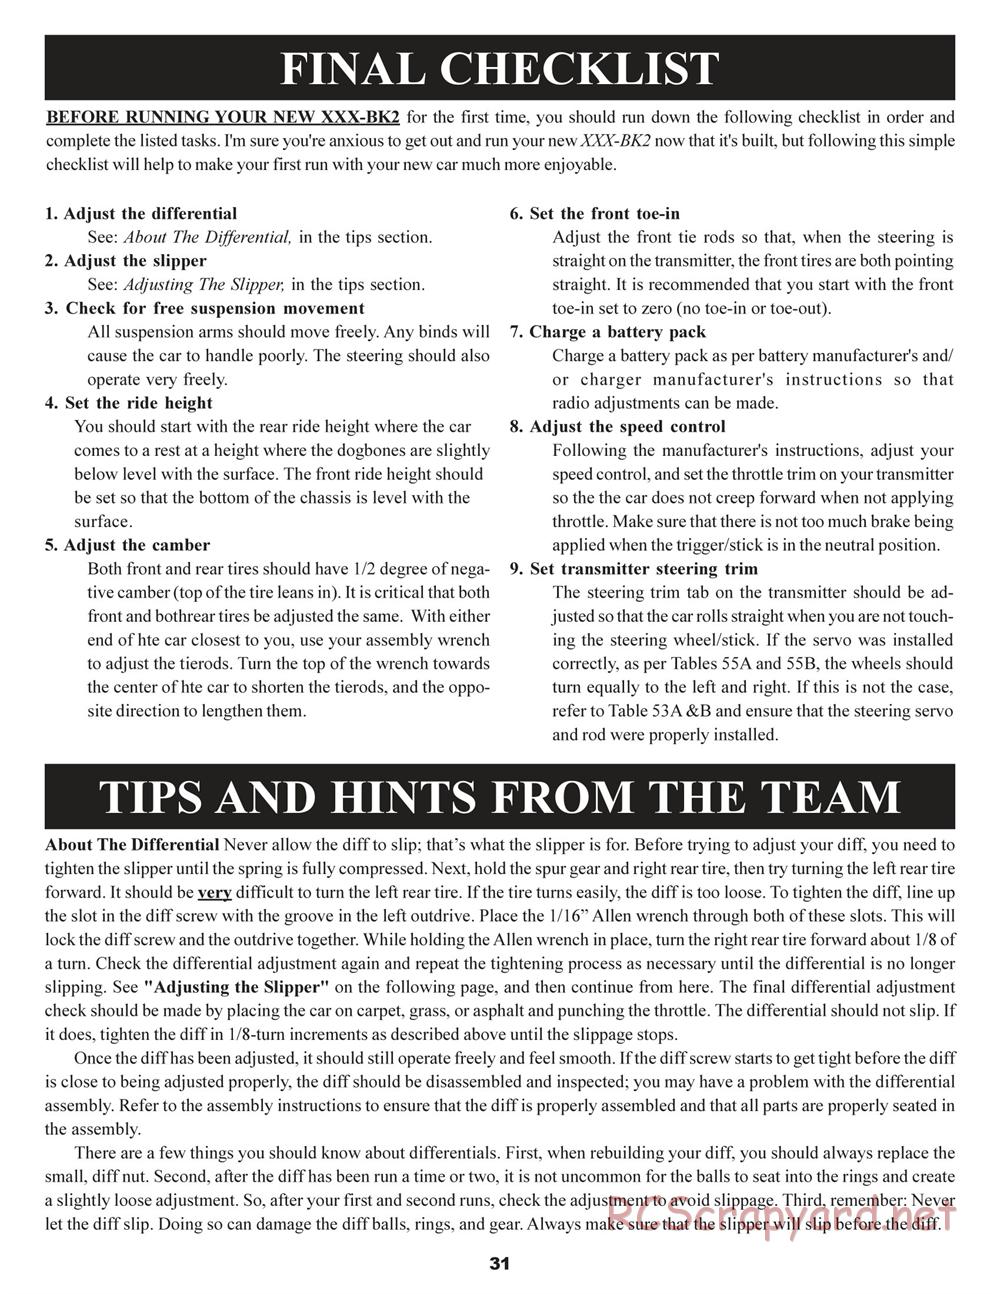 Team Losi - XXX BK2 - Kinwald Edition - Manual - Page 35